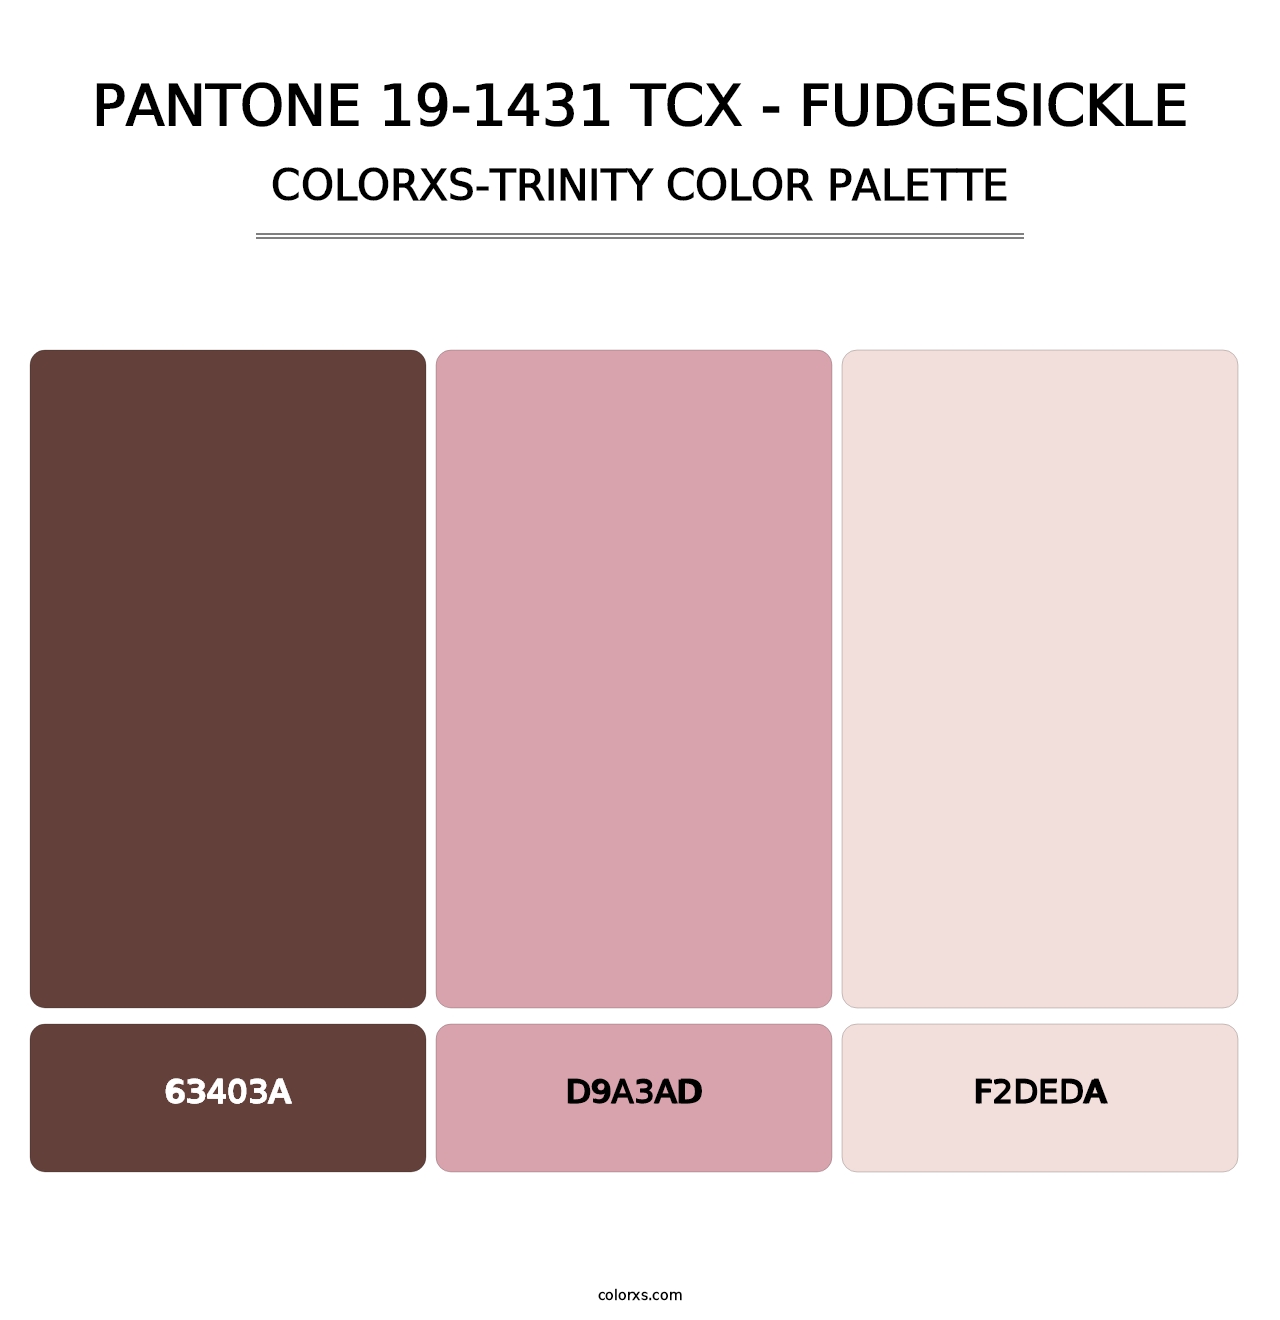 PANTONE 19-1431 TCX - Fudgesickle - Colorxs Trinity Palette